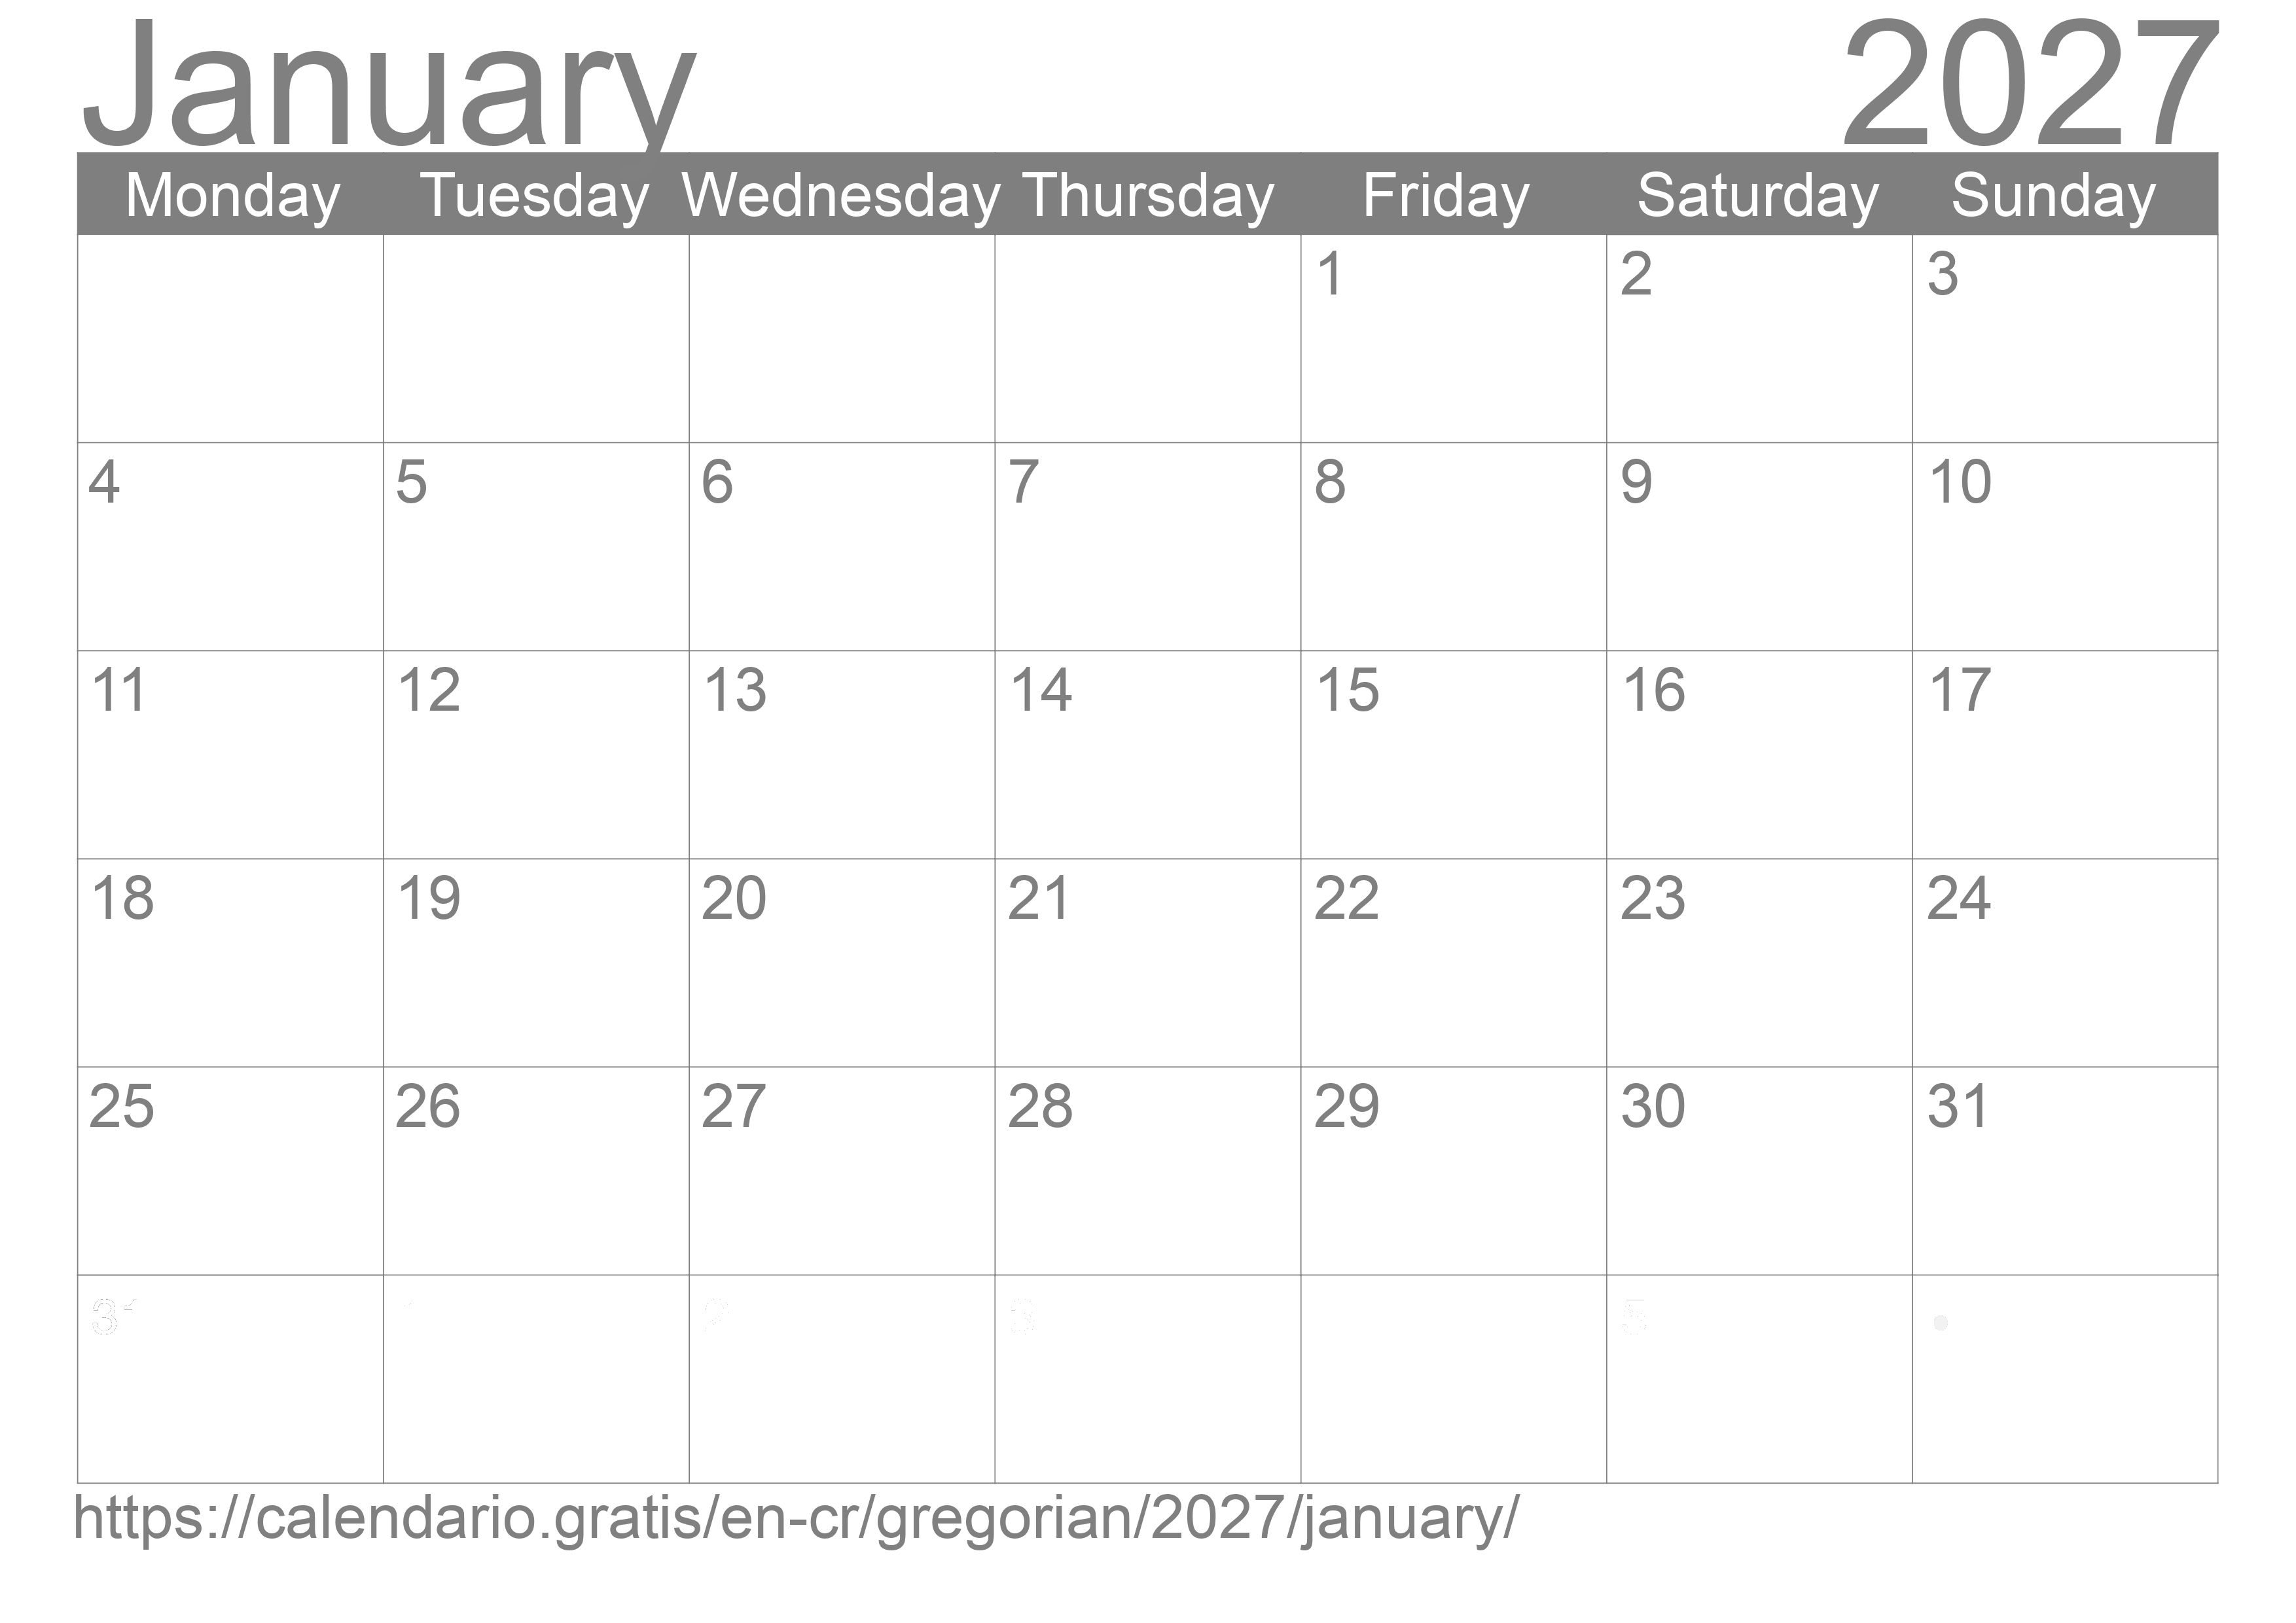 Calendar January 2027 to print